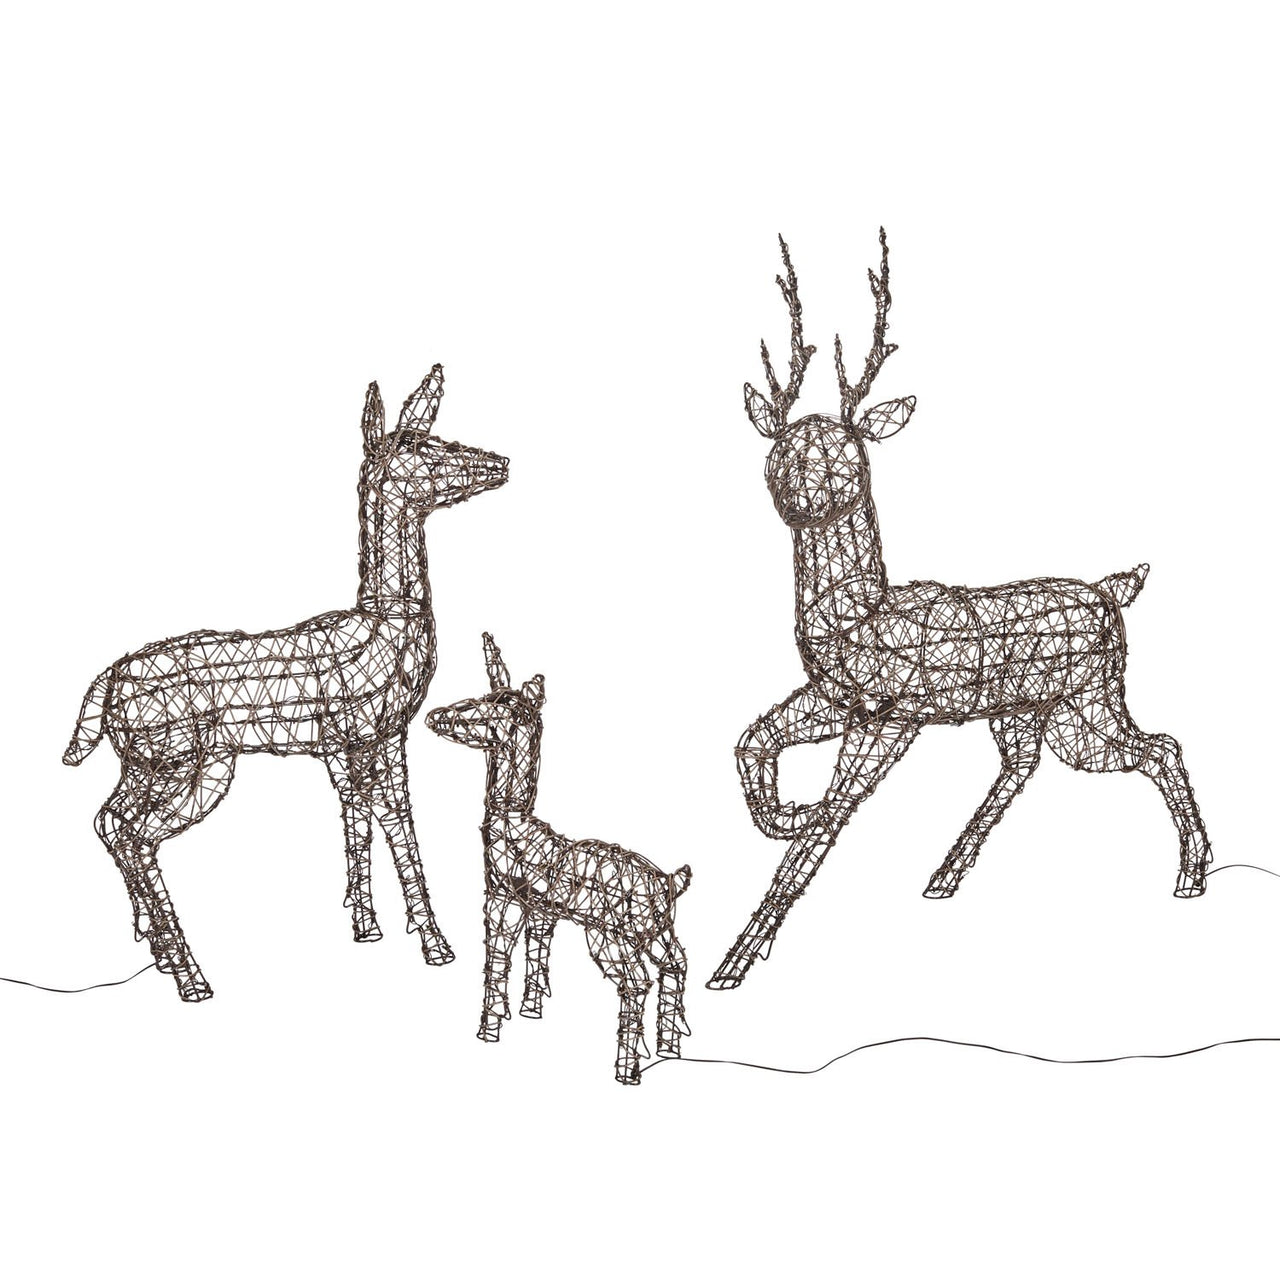 Studley Rattan Light Up Reindeer Family Christmas Figures 24v